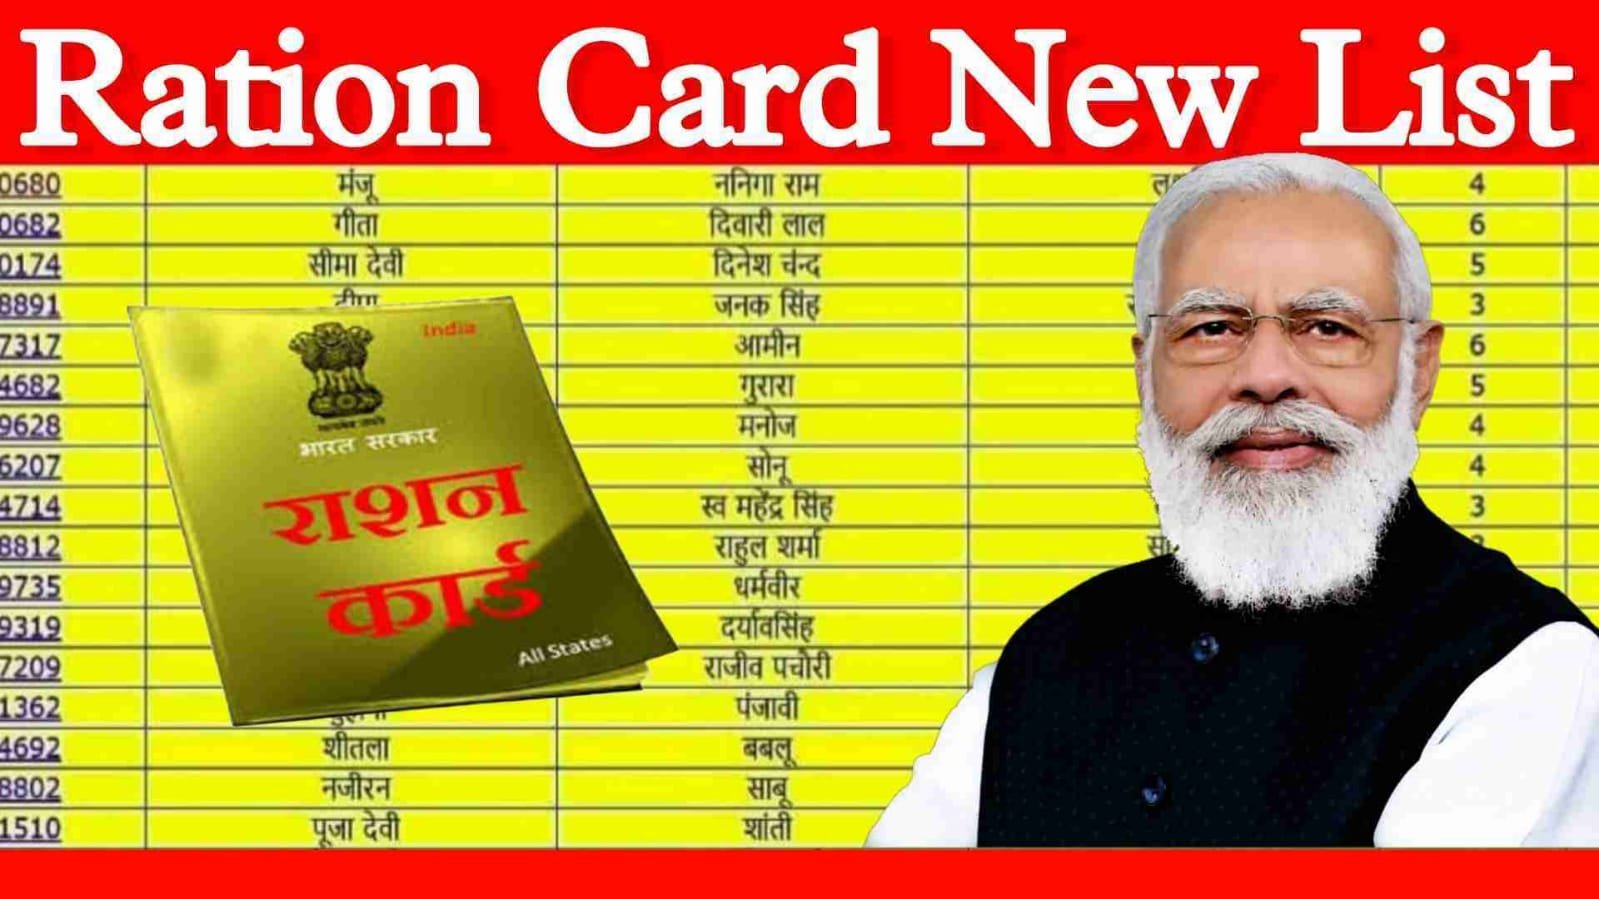 Ration Card New List